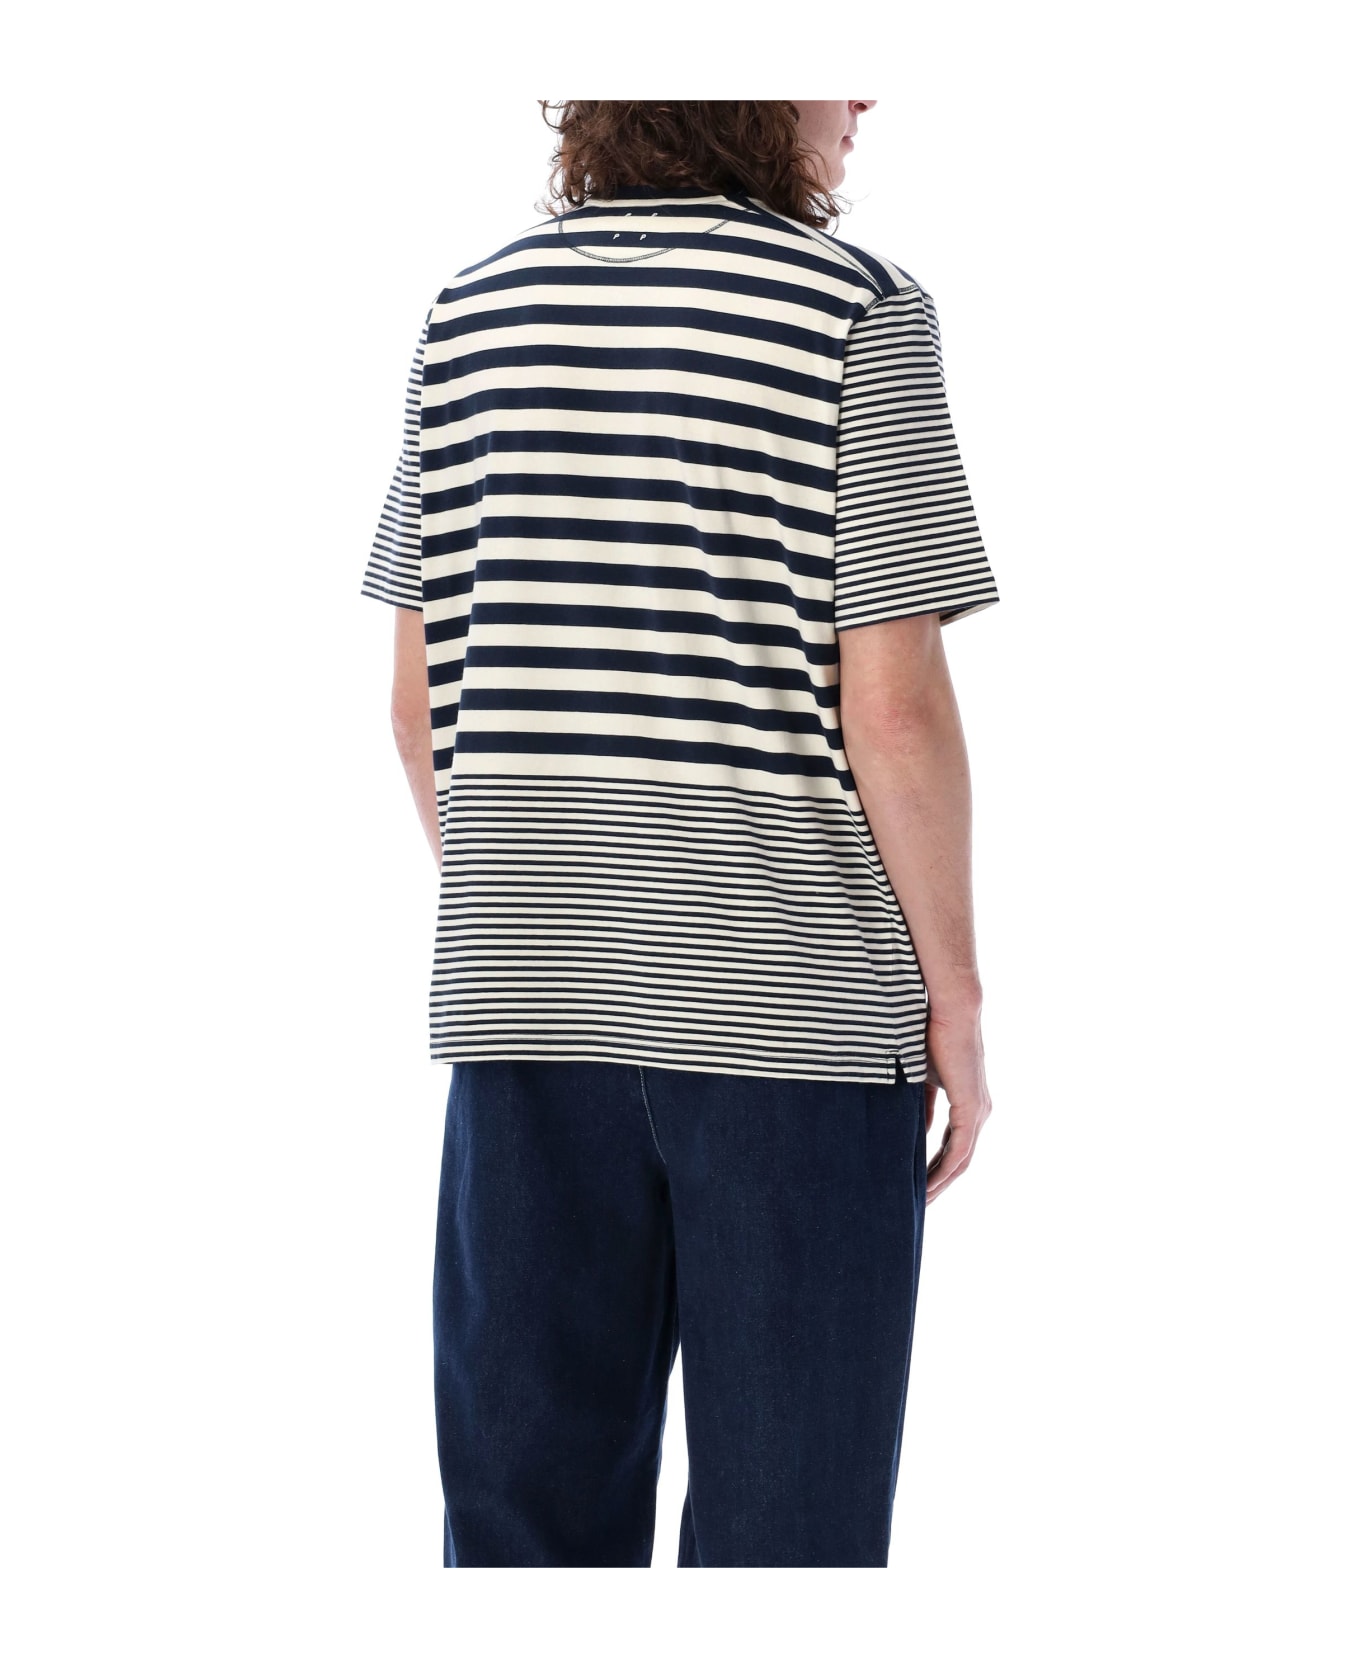 Pop Trading Company Pop Striped Pocket T-shirt - NAVY OFF WHITE